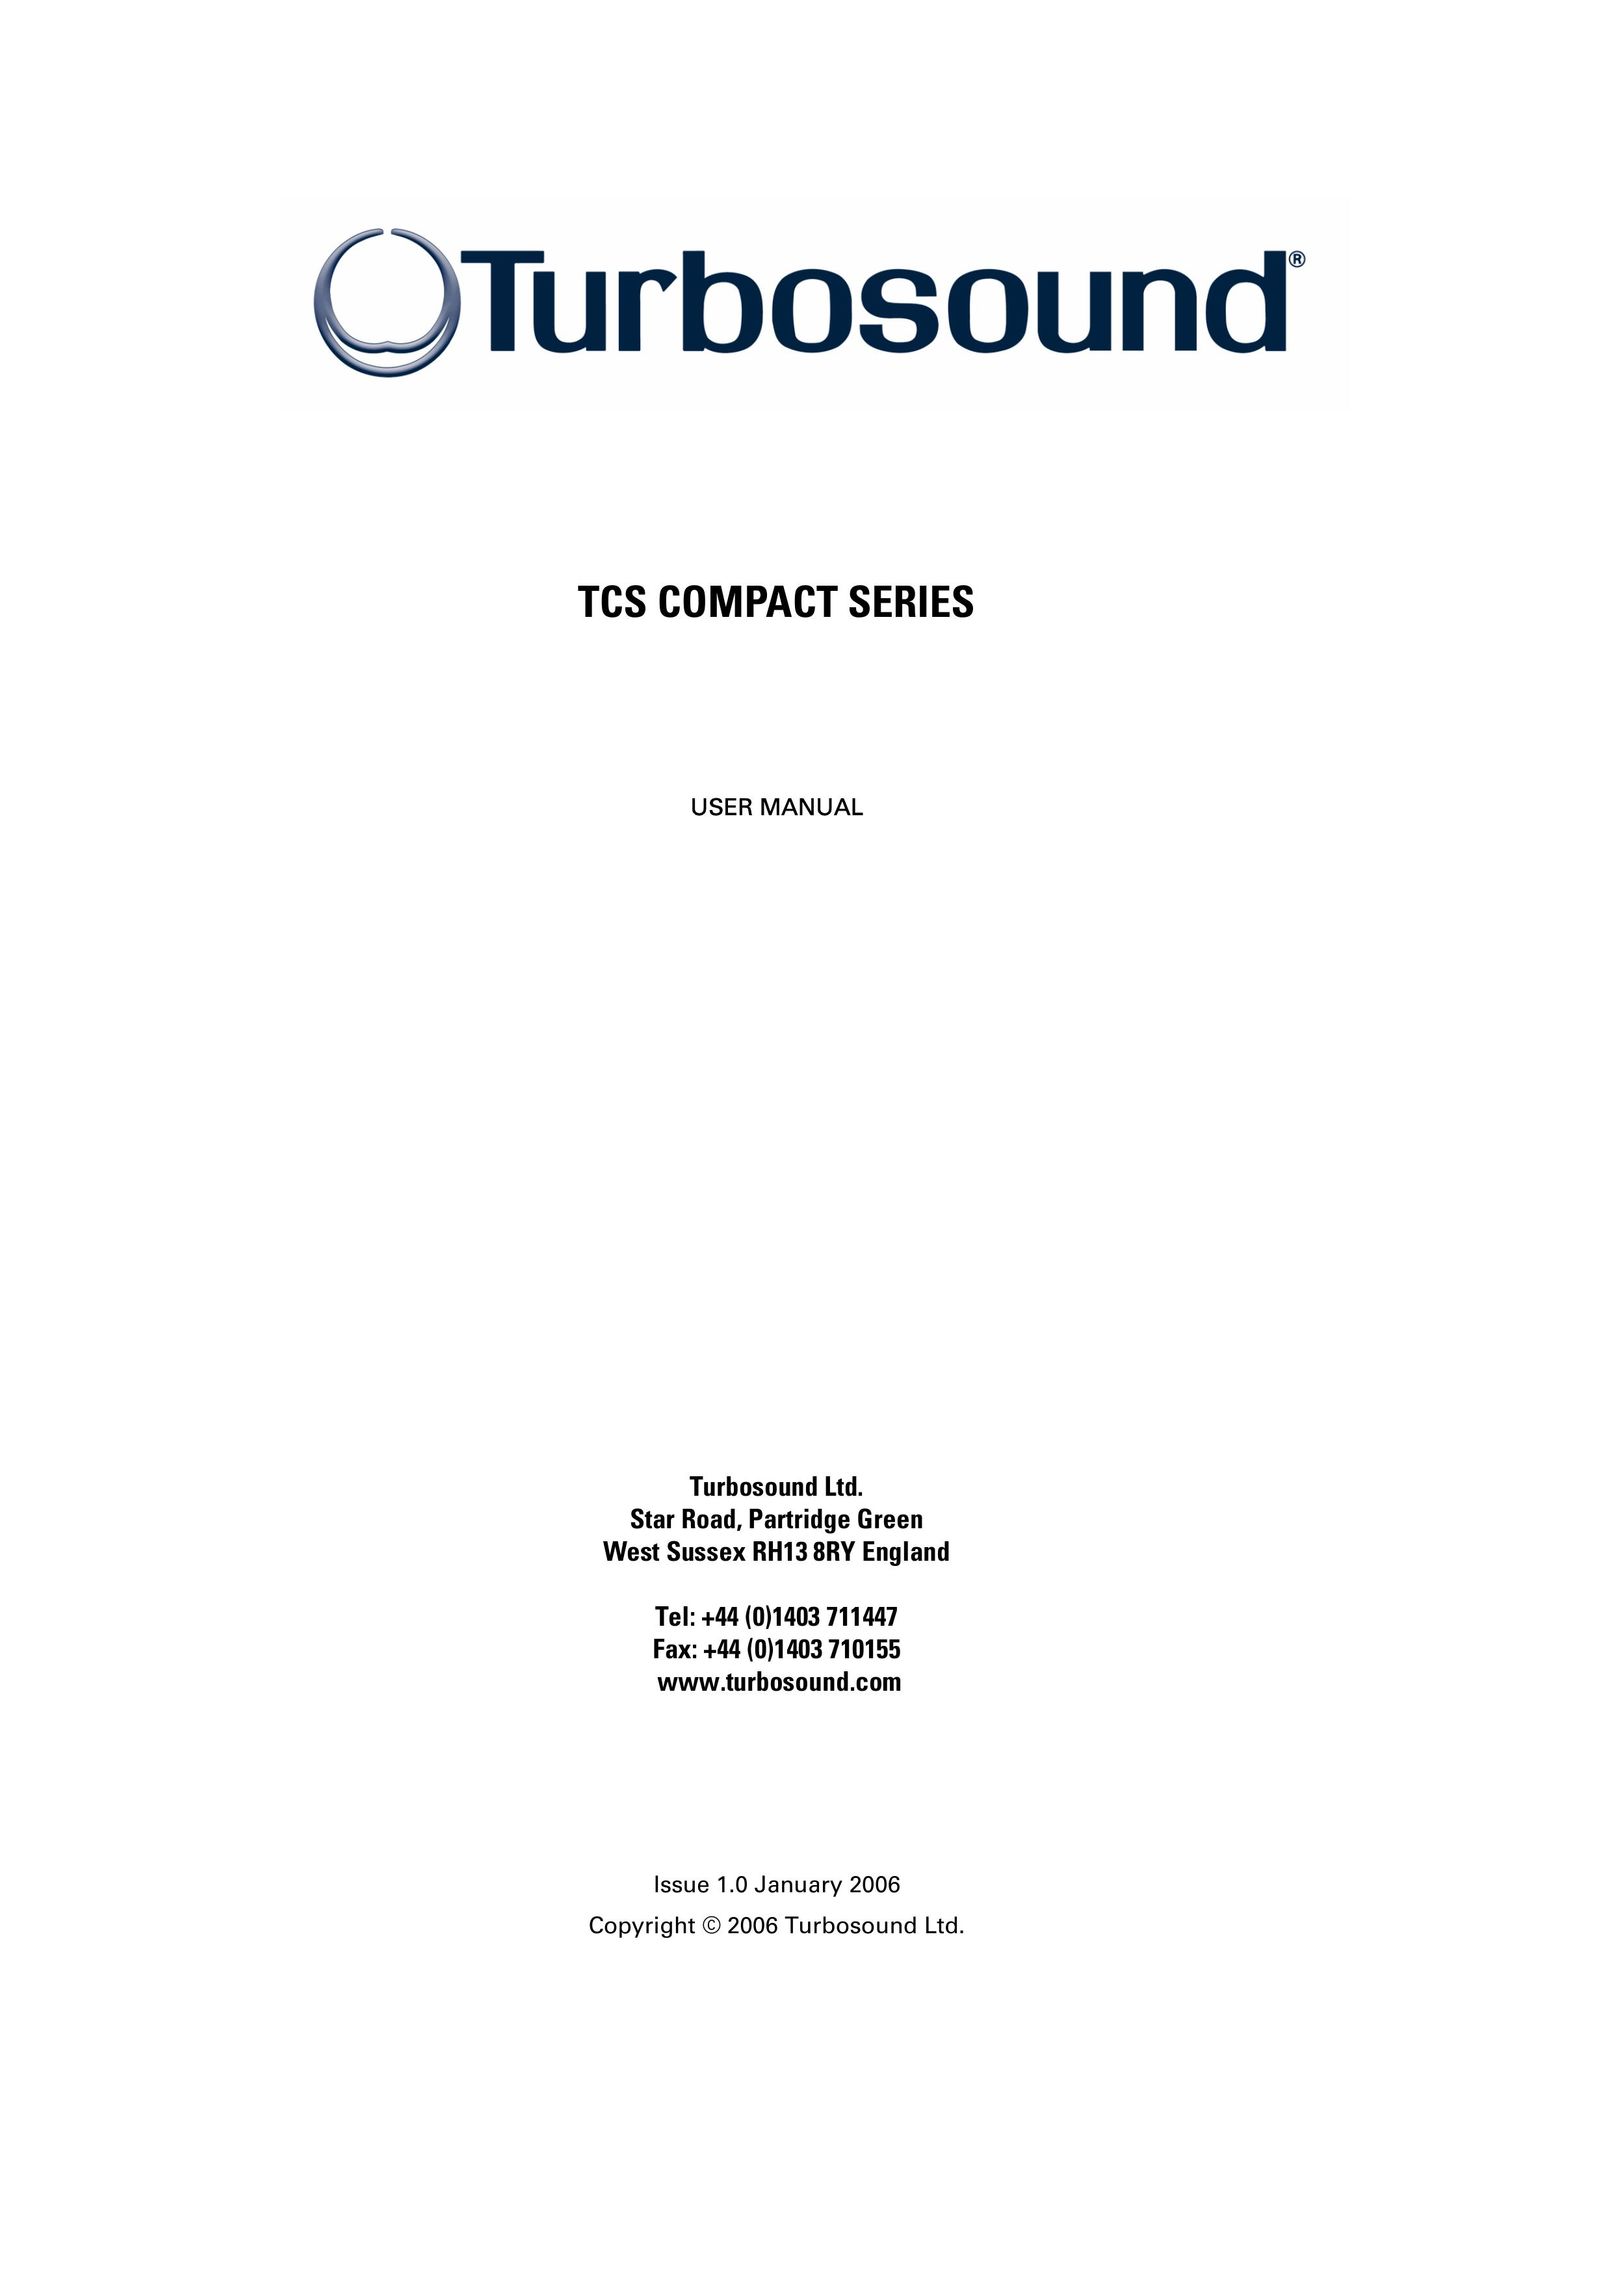 Turbosound TCS COMPACT SERIES Portable Speaker User Manual